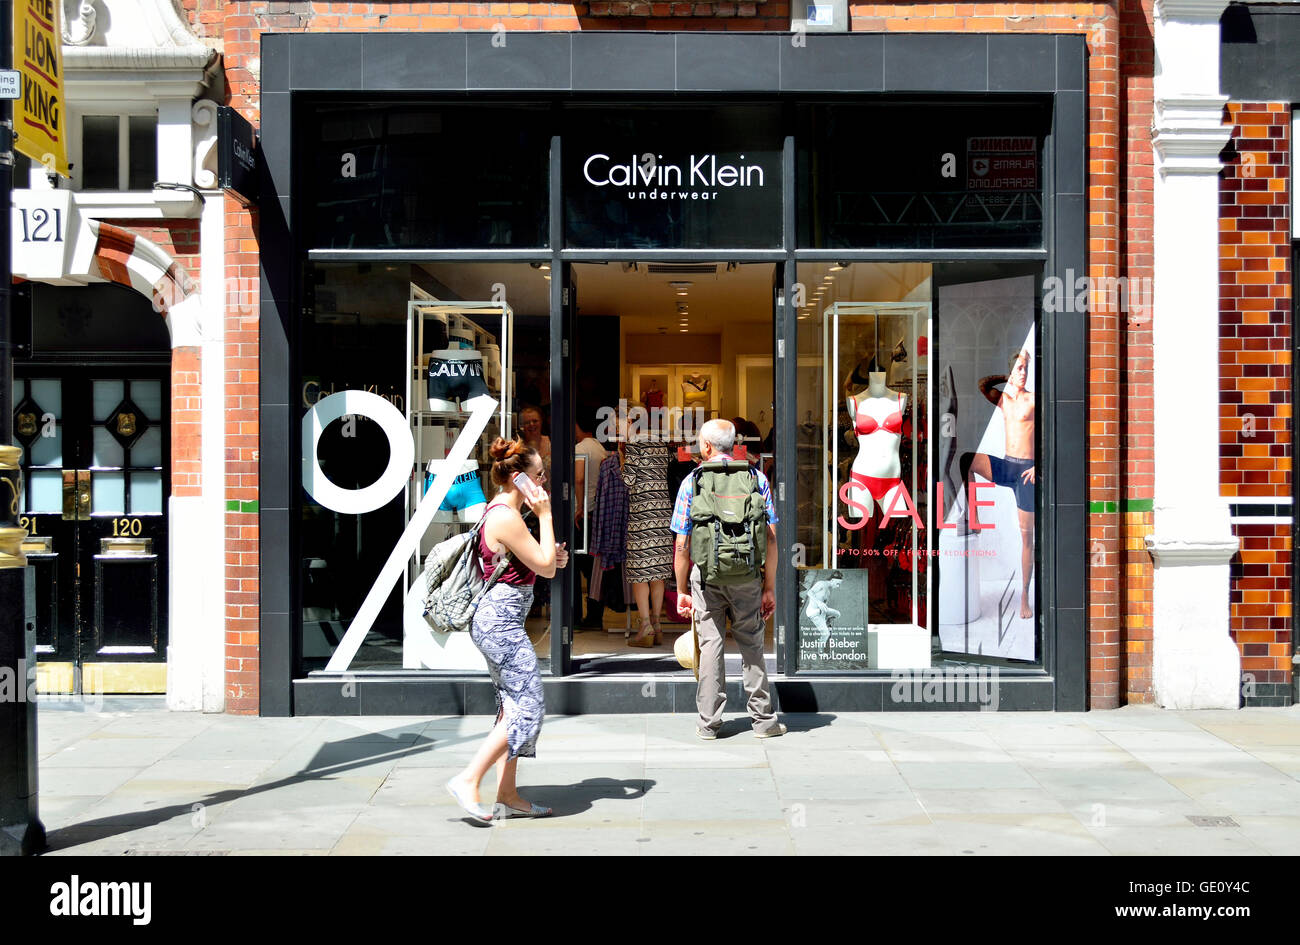 London, England, UK. Calvin Klein shop front Stock Photo - Alamy